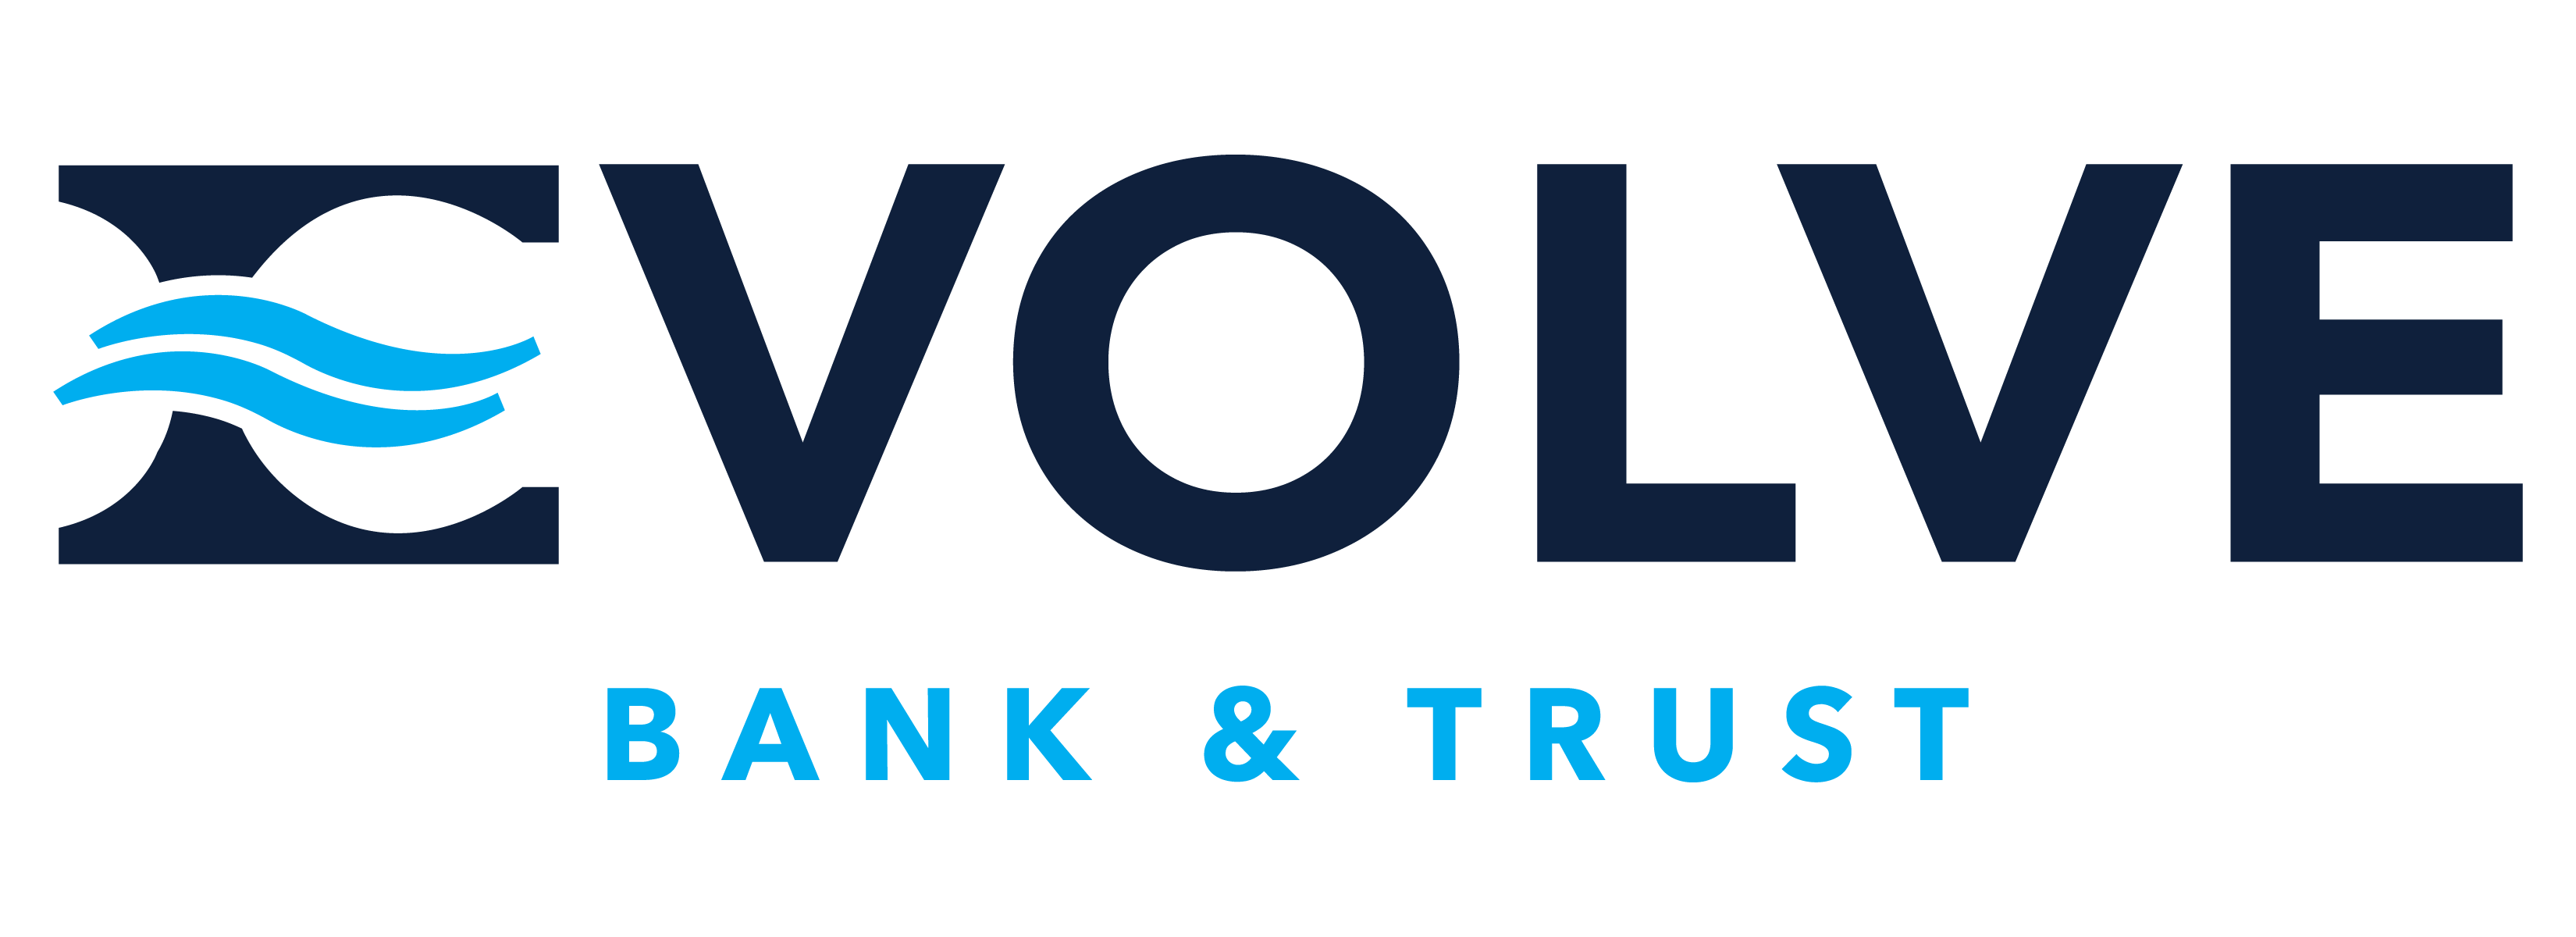 Evolve Bank & Trust Company Logo